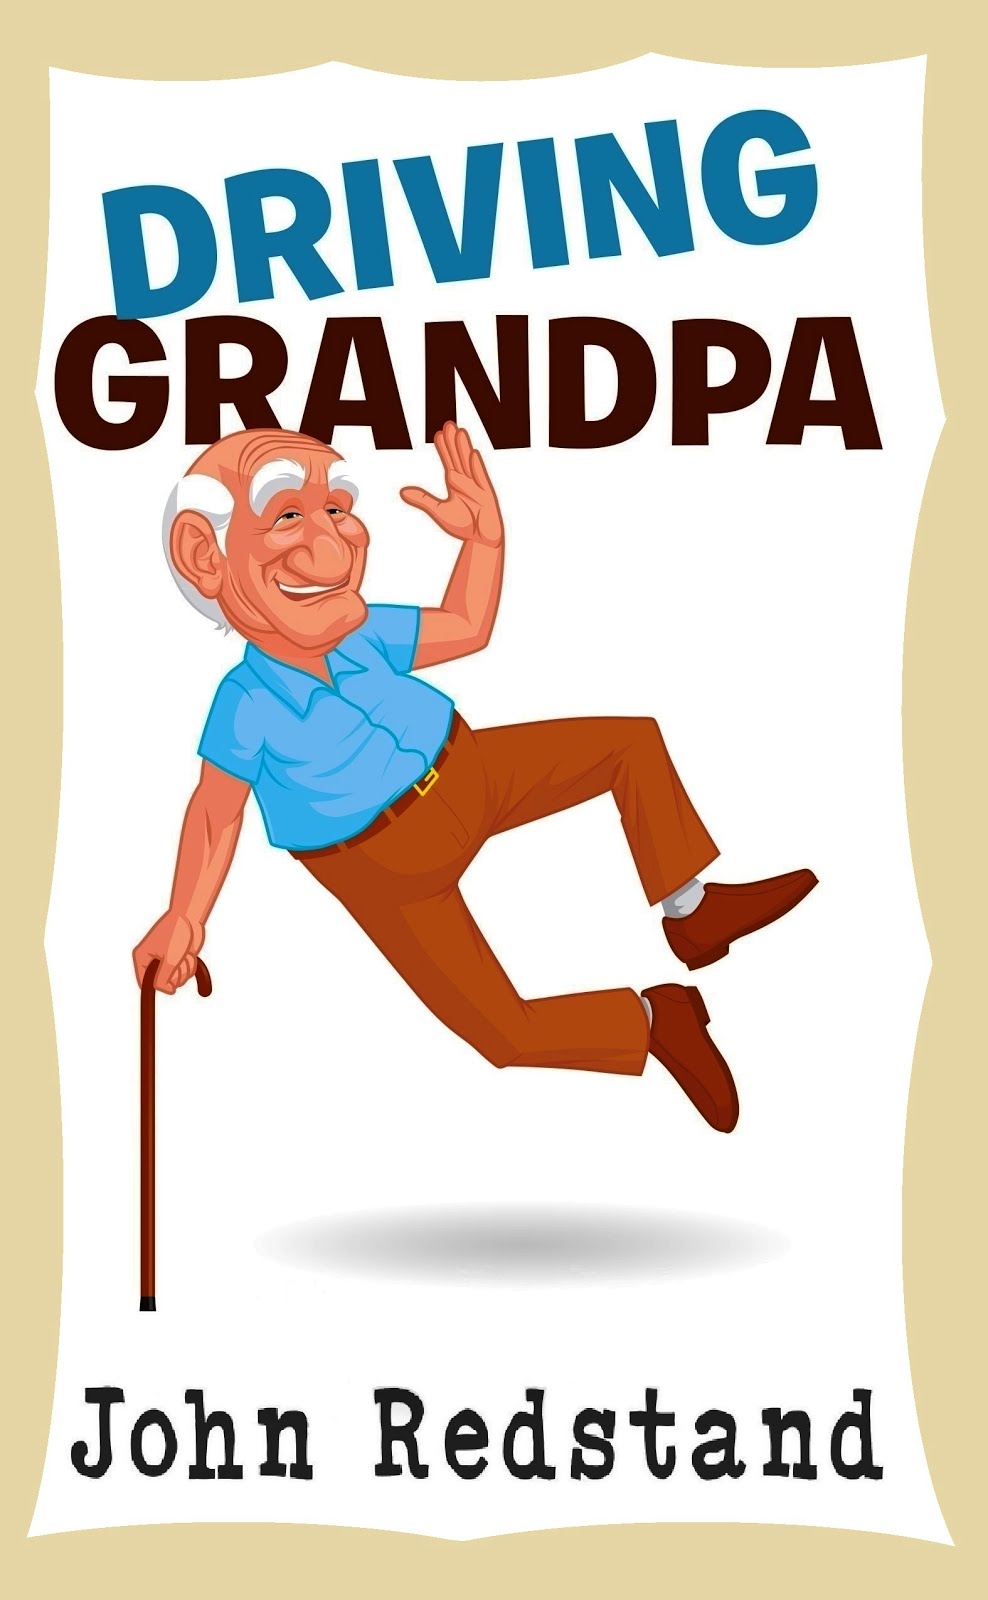 Driving Grandpa by John Redstand